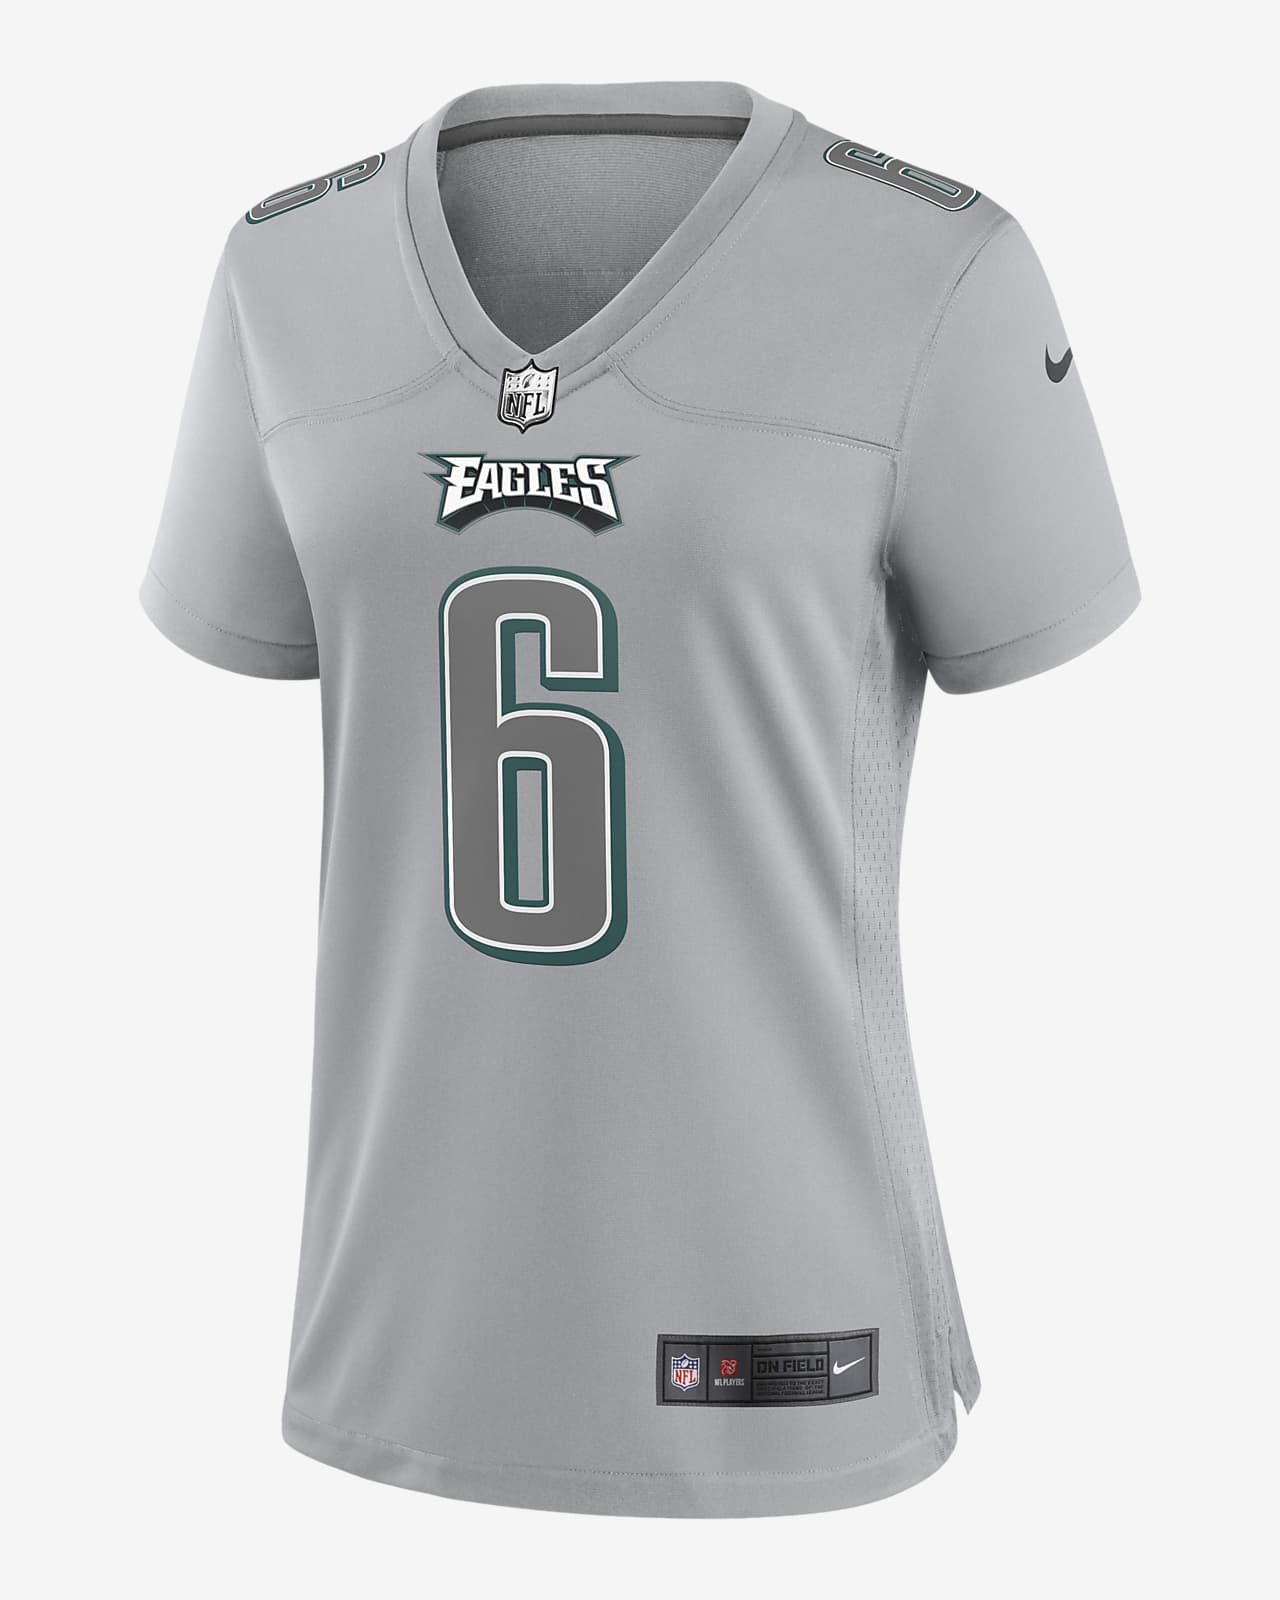 Jersey de fútbol americano Fashion para mujer NFL Philadelphia Eagles Atmosphere (DeVonta Nike.com